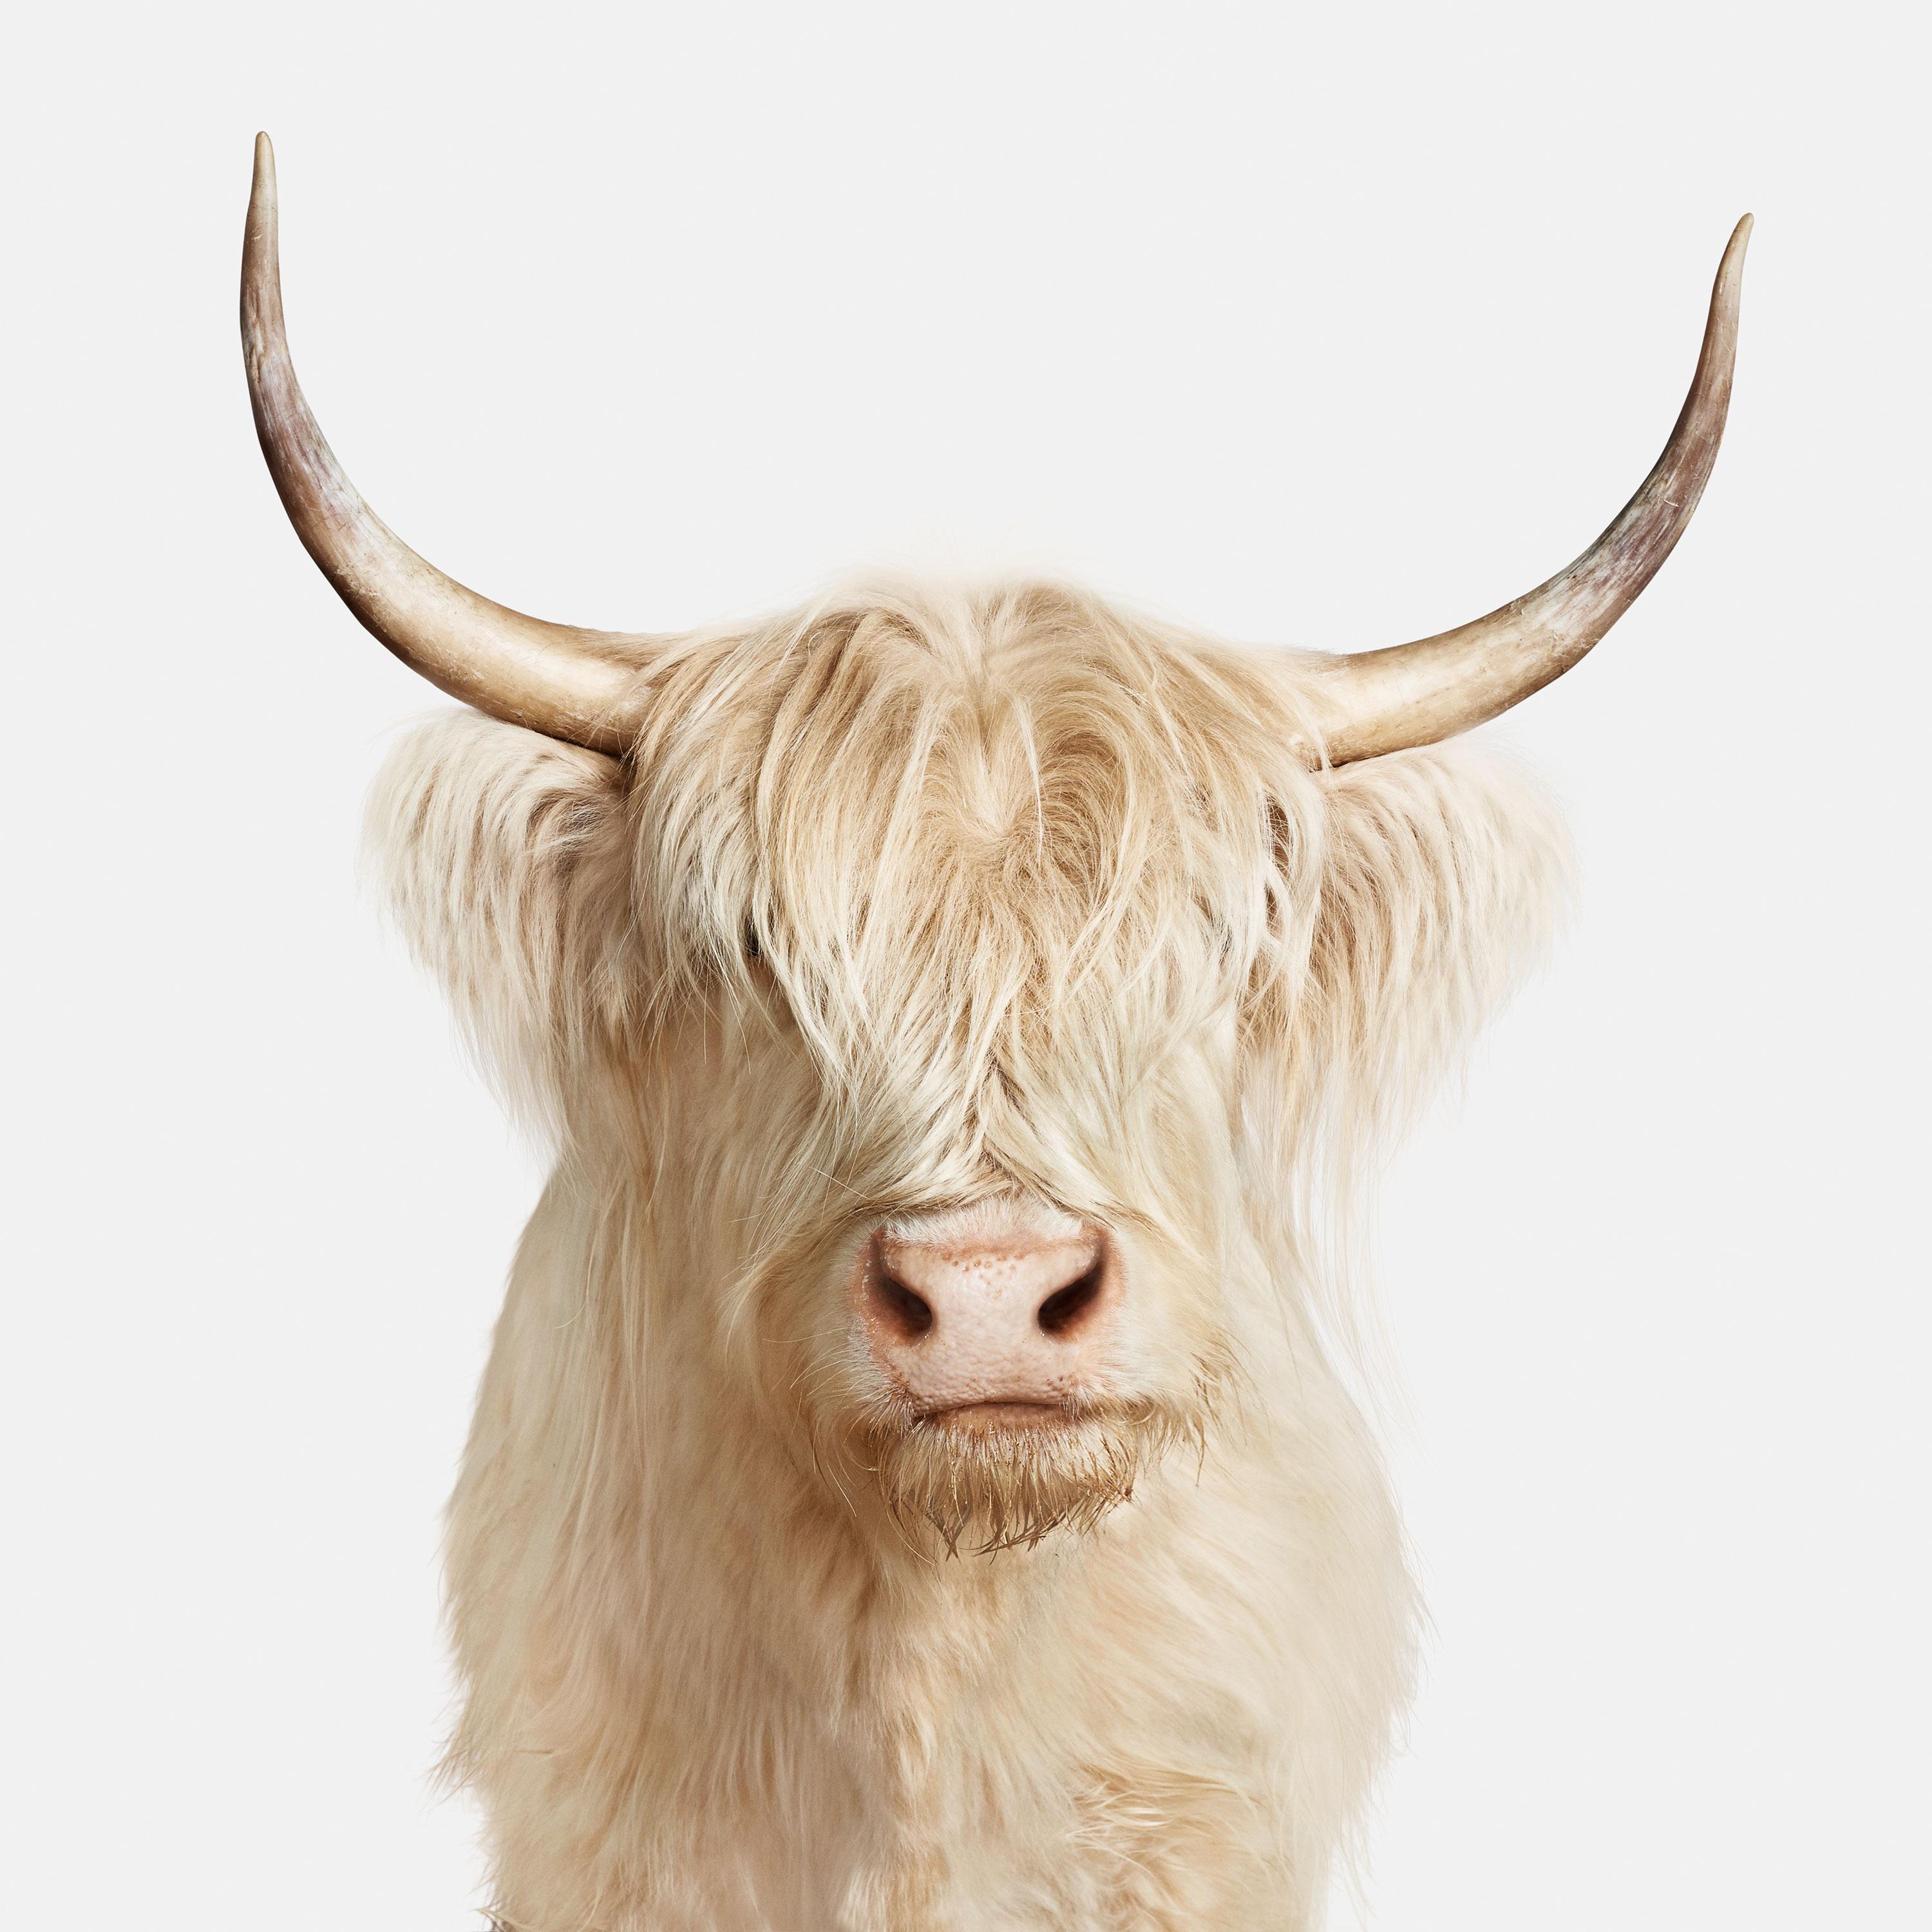 Randal Ford – Highland Cow No. 1, Fotografie 2018